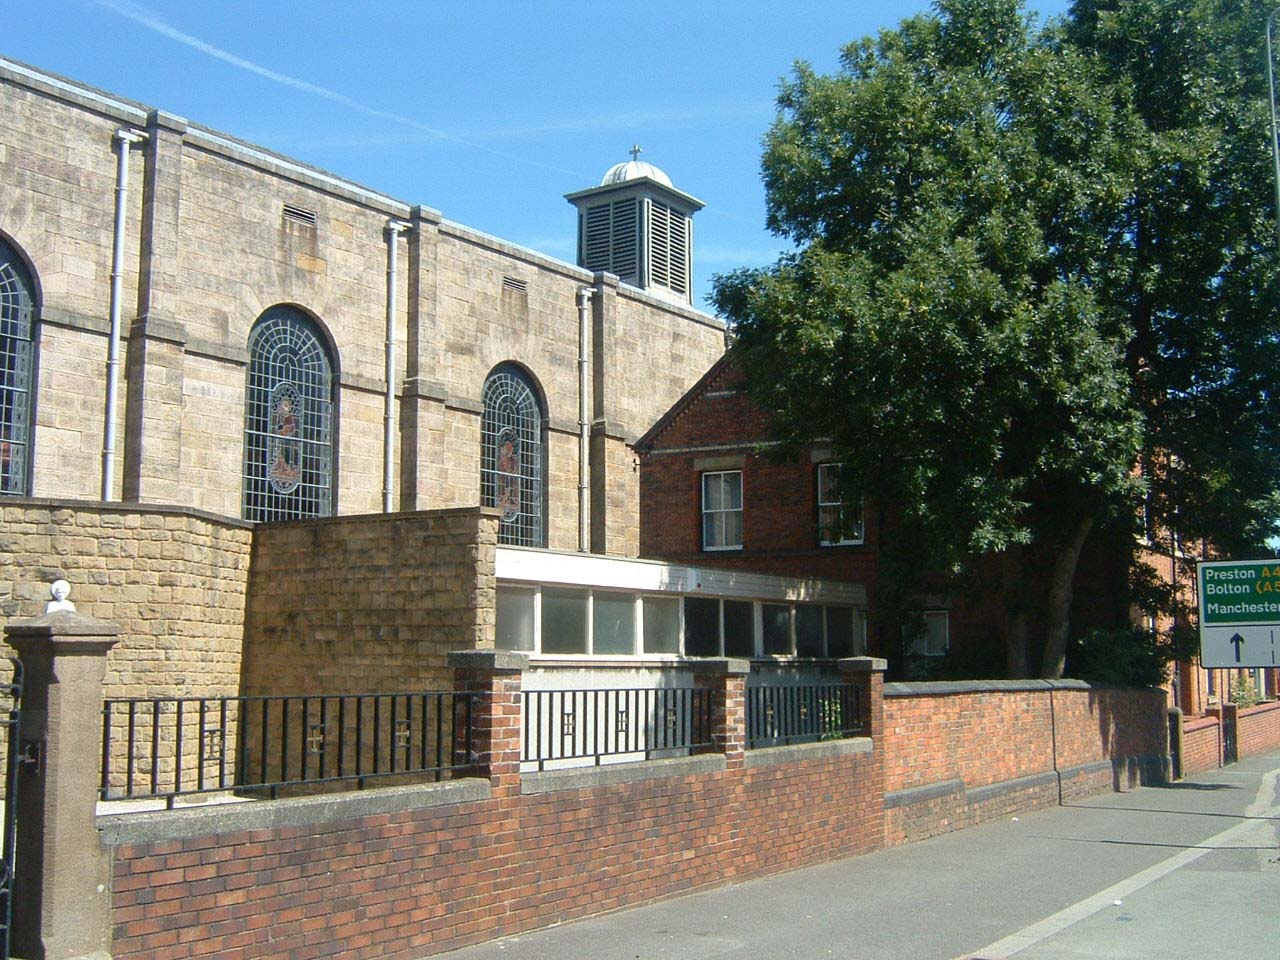 The Roman Catholic Church of St John, Wigan